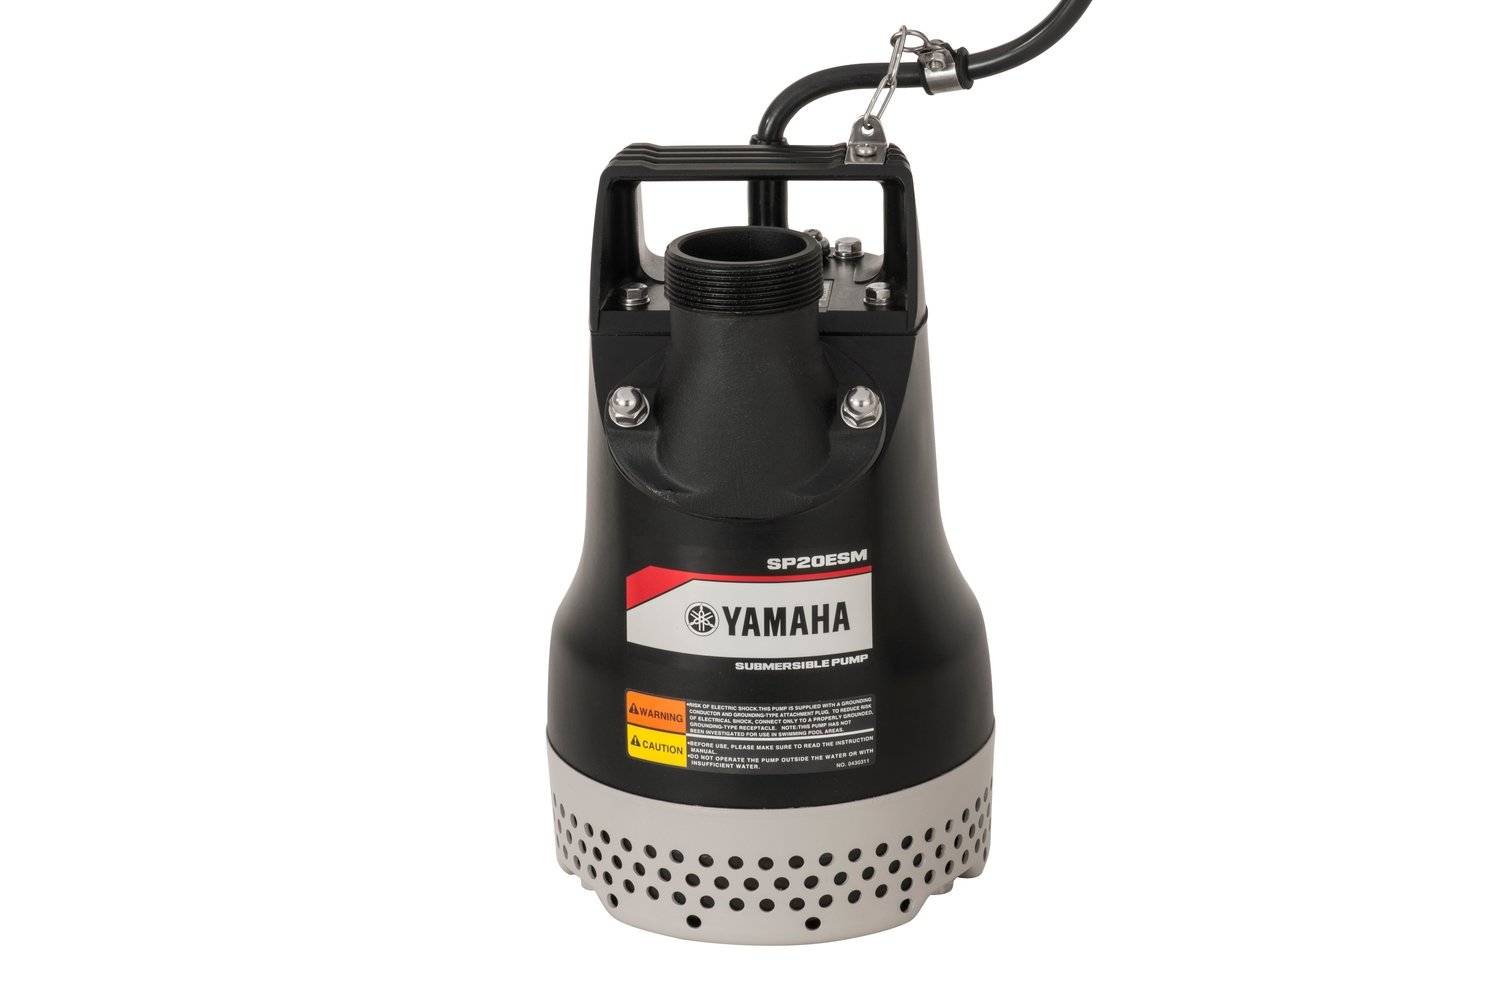 Yamaha® SP20ESM Submersible Pump